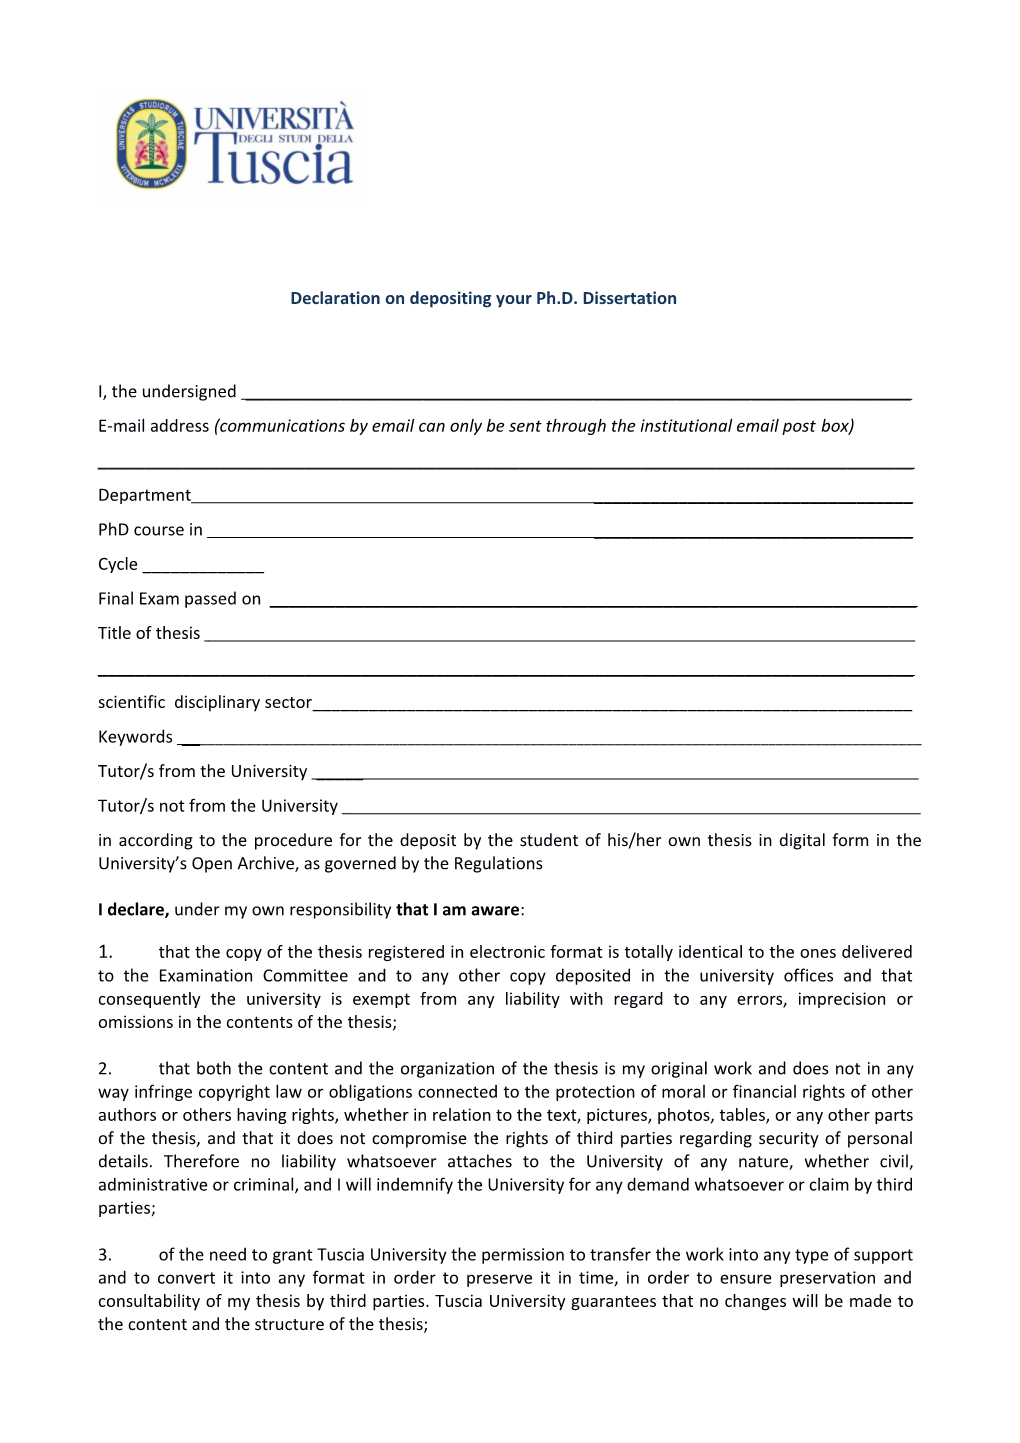 Declaration on Depositing Your Ph.D. Dissertation